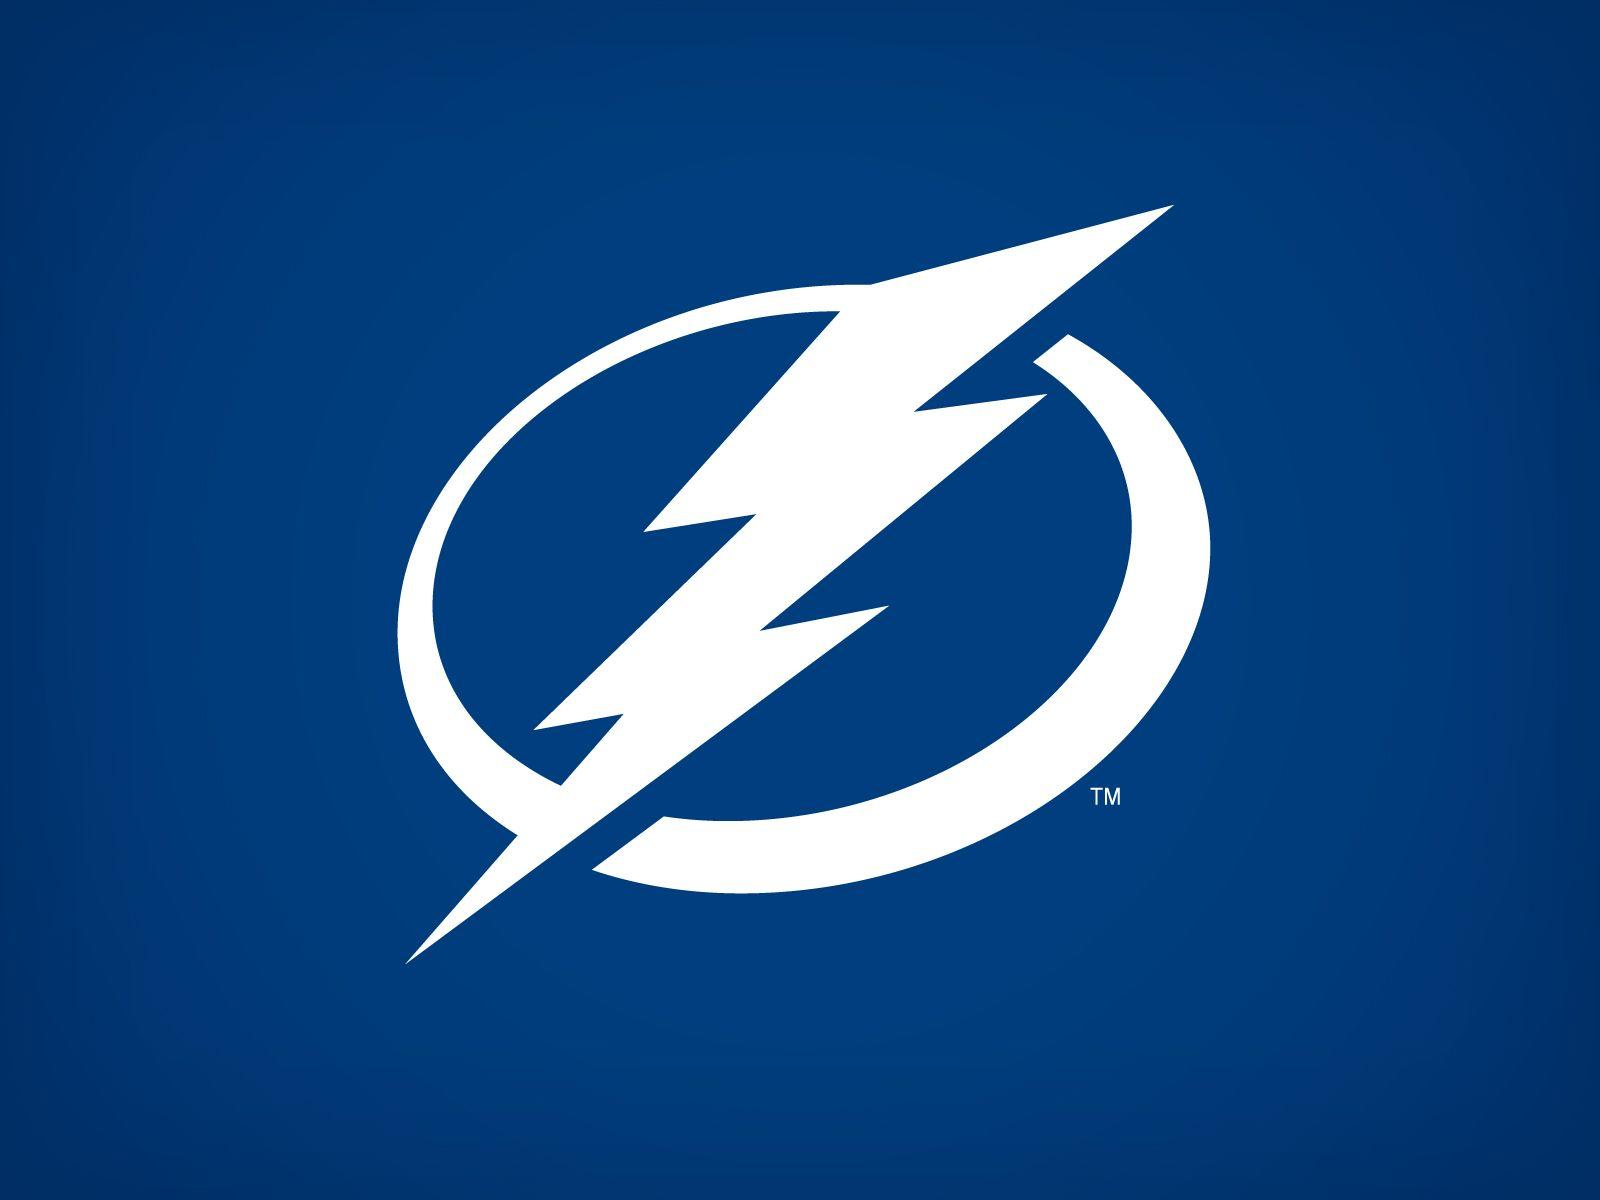 Tampa Bay Lightning logo. Go Bolts!. Tampa bay